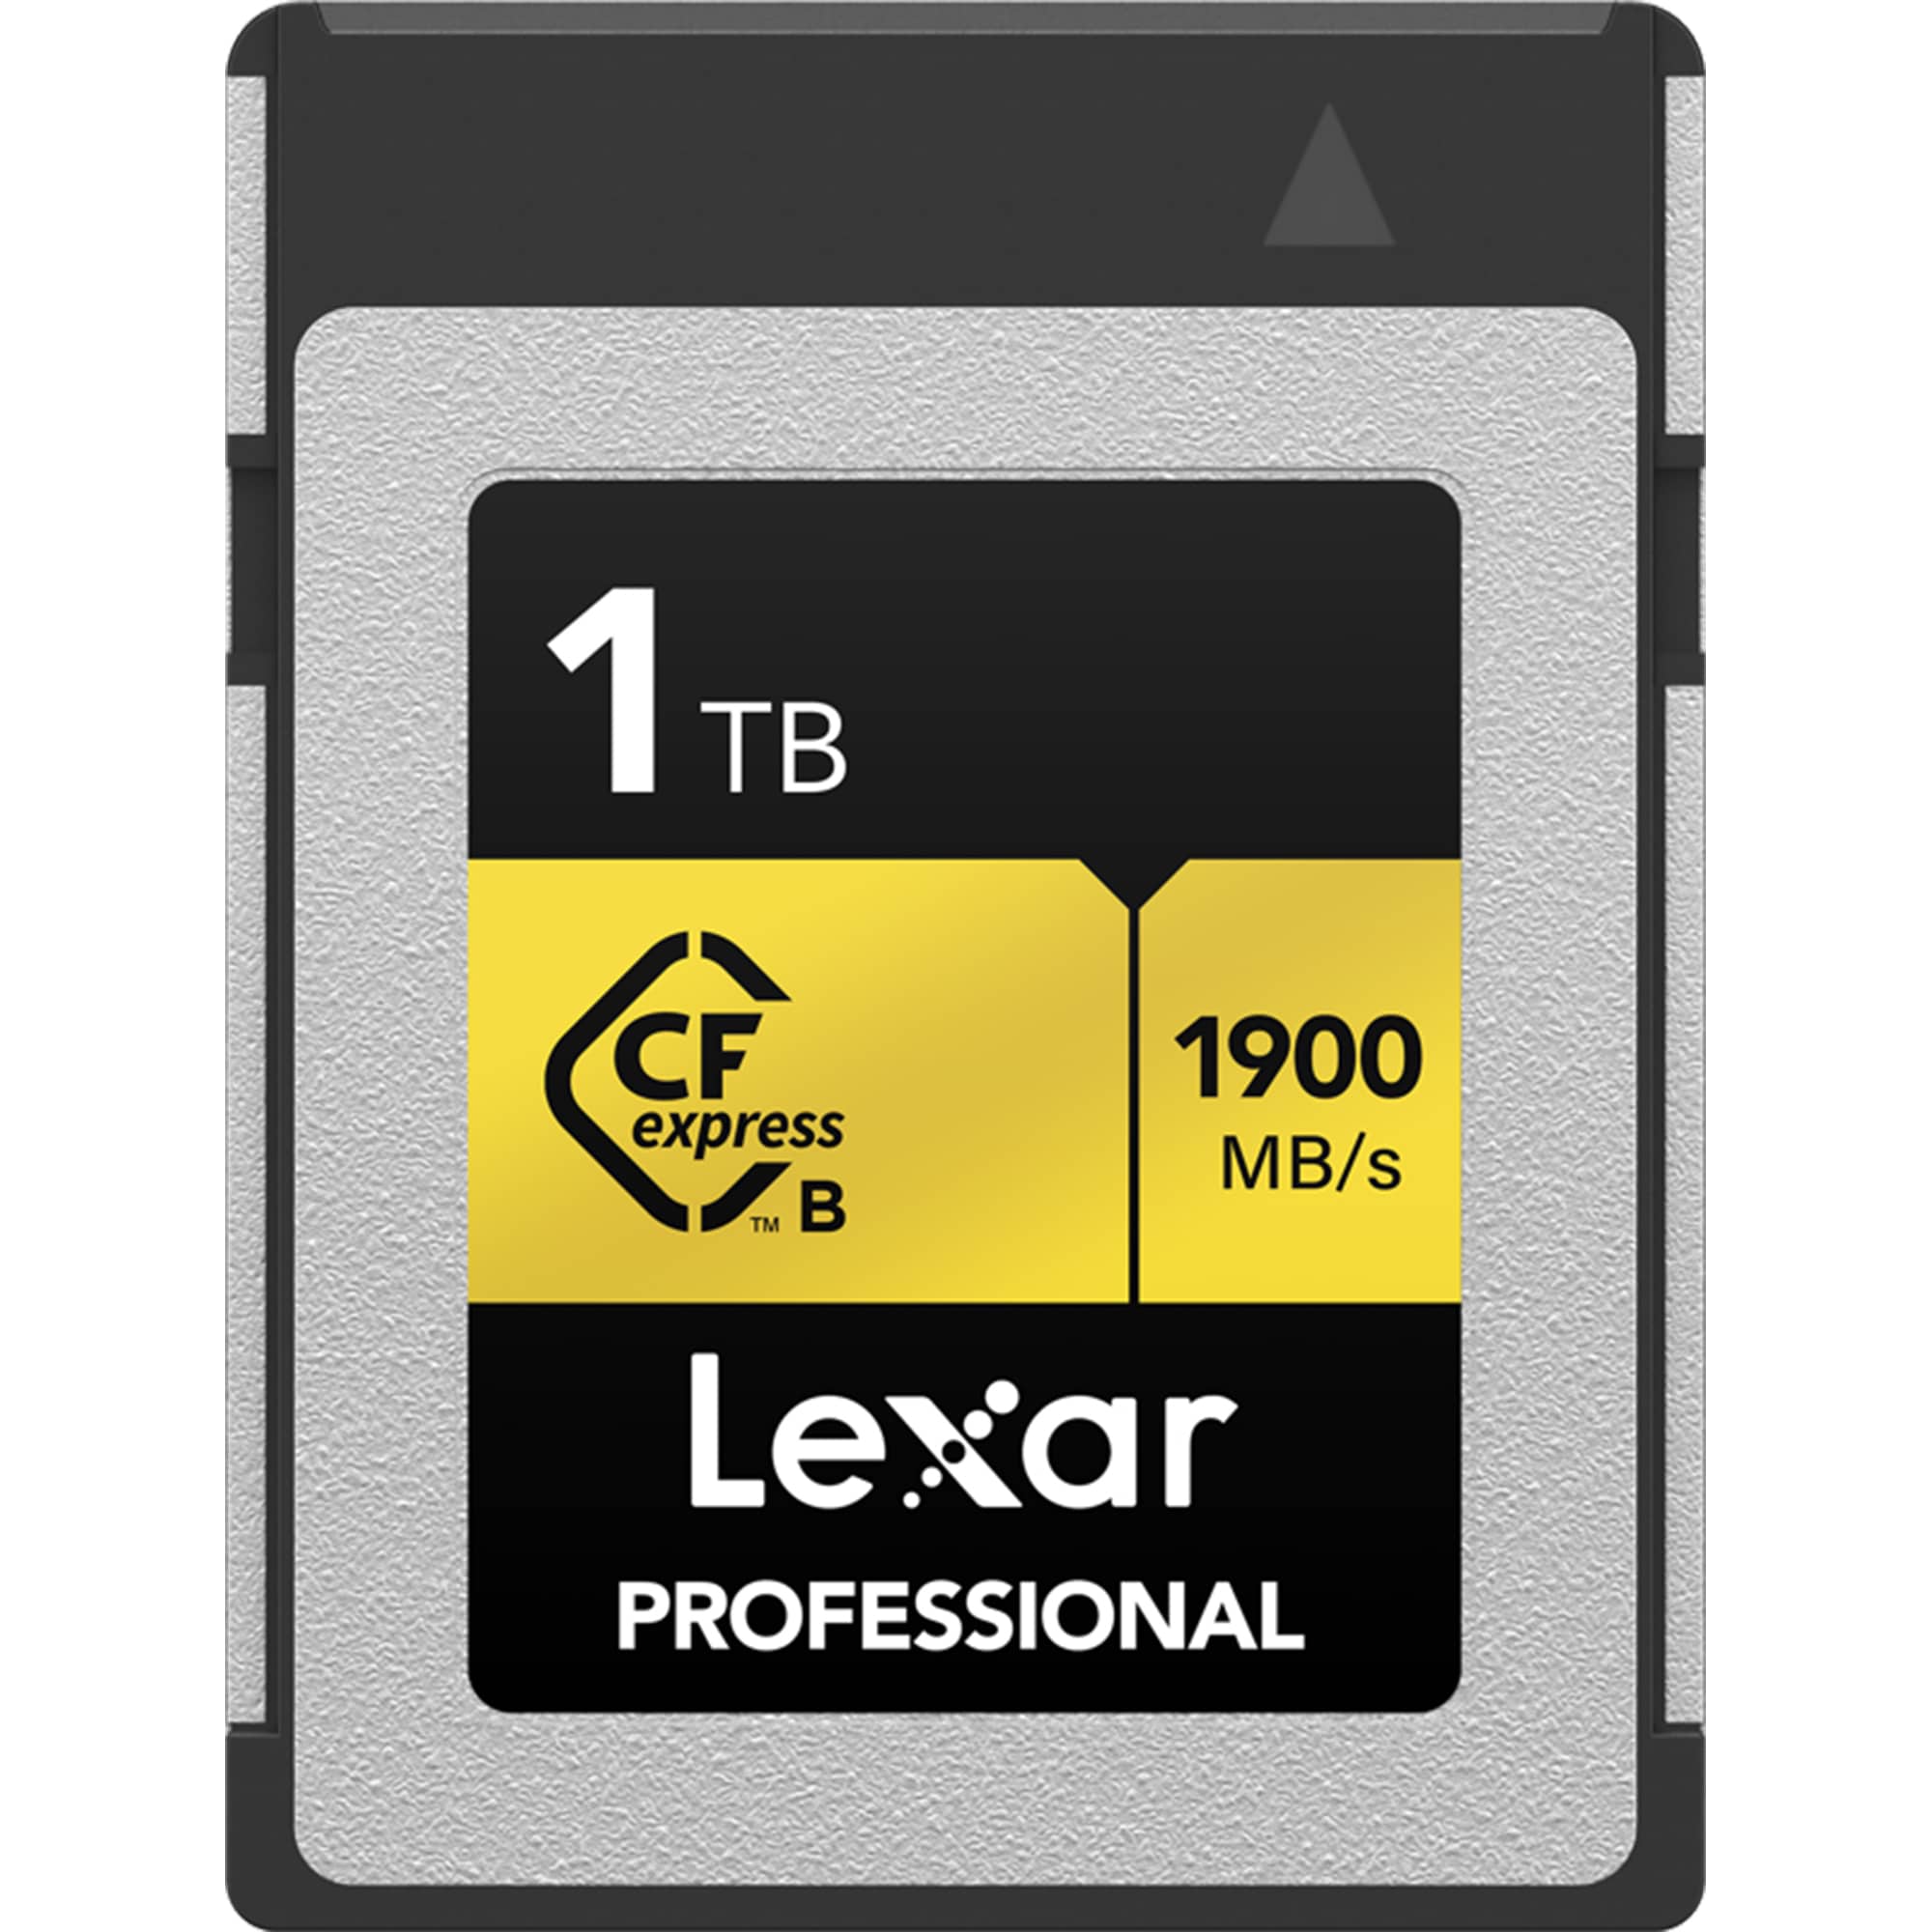 Lexar CFexpress Pro Gold R1900/W1500 1TB